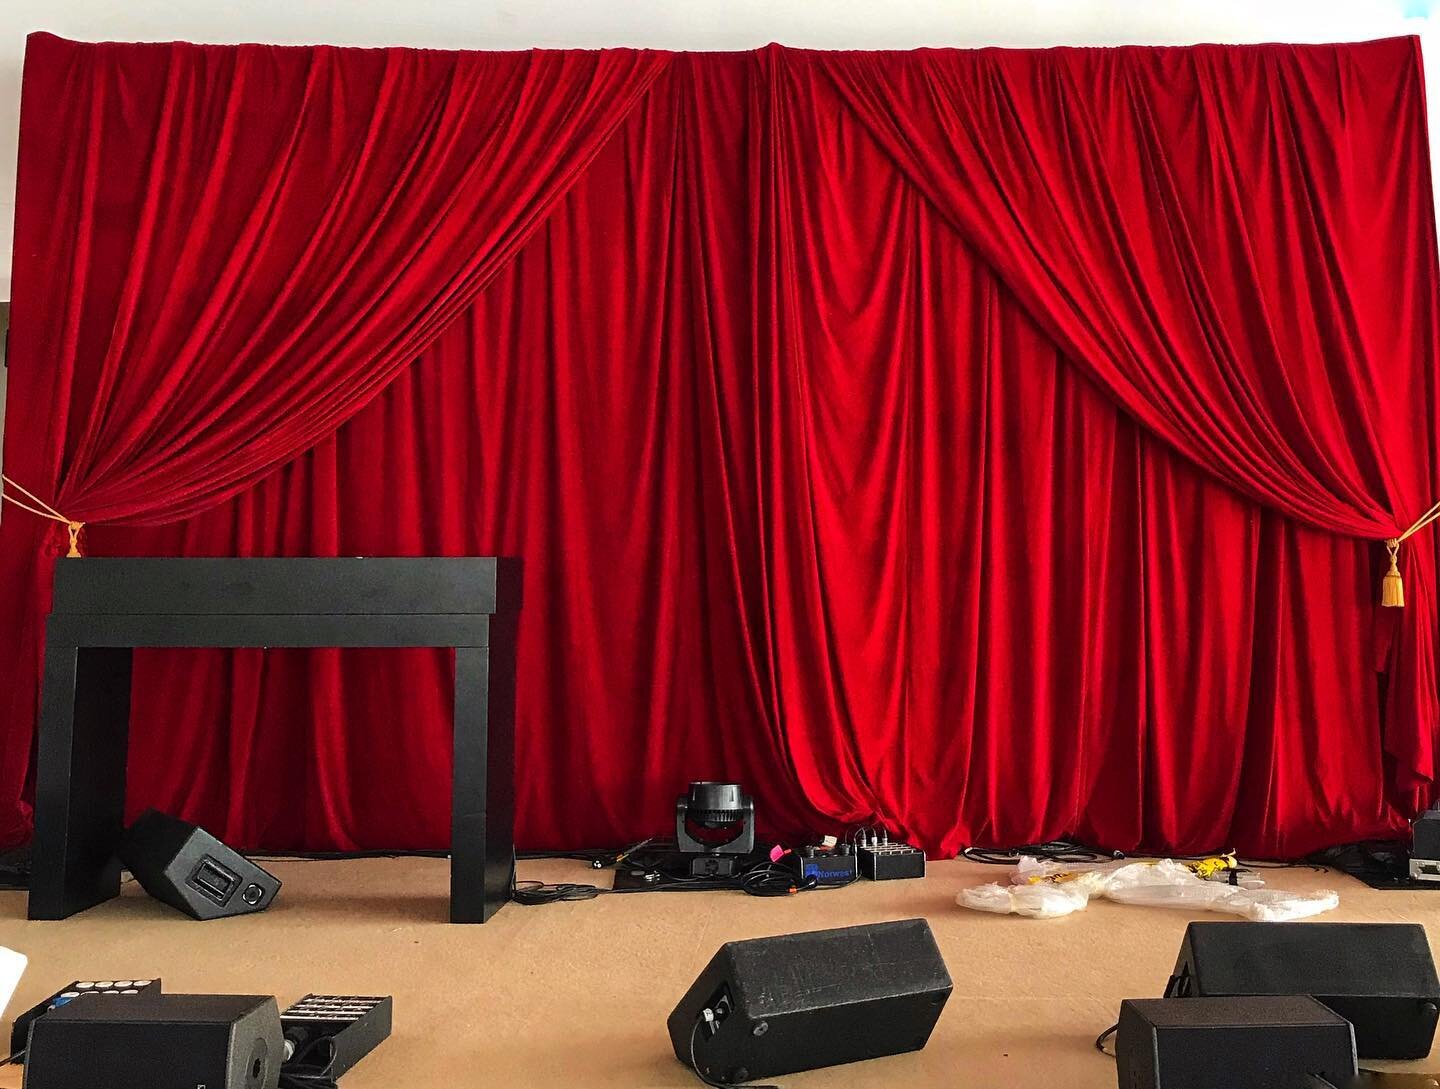 🔴Red velvet stage backdrop 🔴

#sydneyevents 
#drapehire #drapes #pipeanddrape 
#sydneyeventhire 
#sydneycorporate 
#eventdecor #eventproduction #events #behindthescenes #sydneybusiness